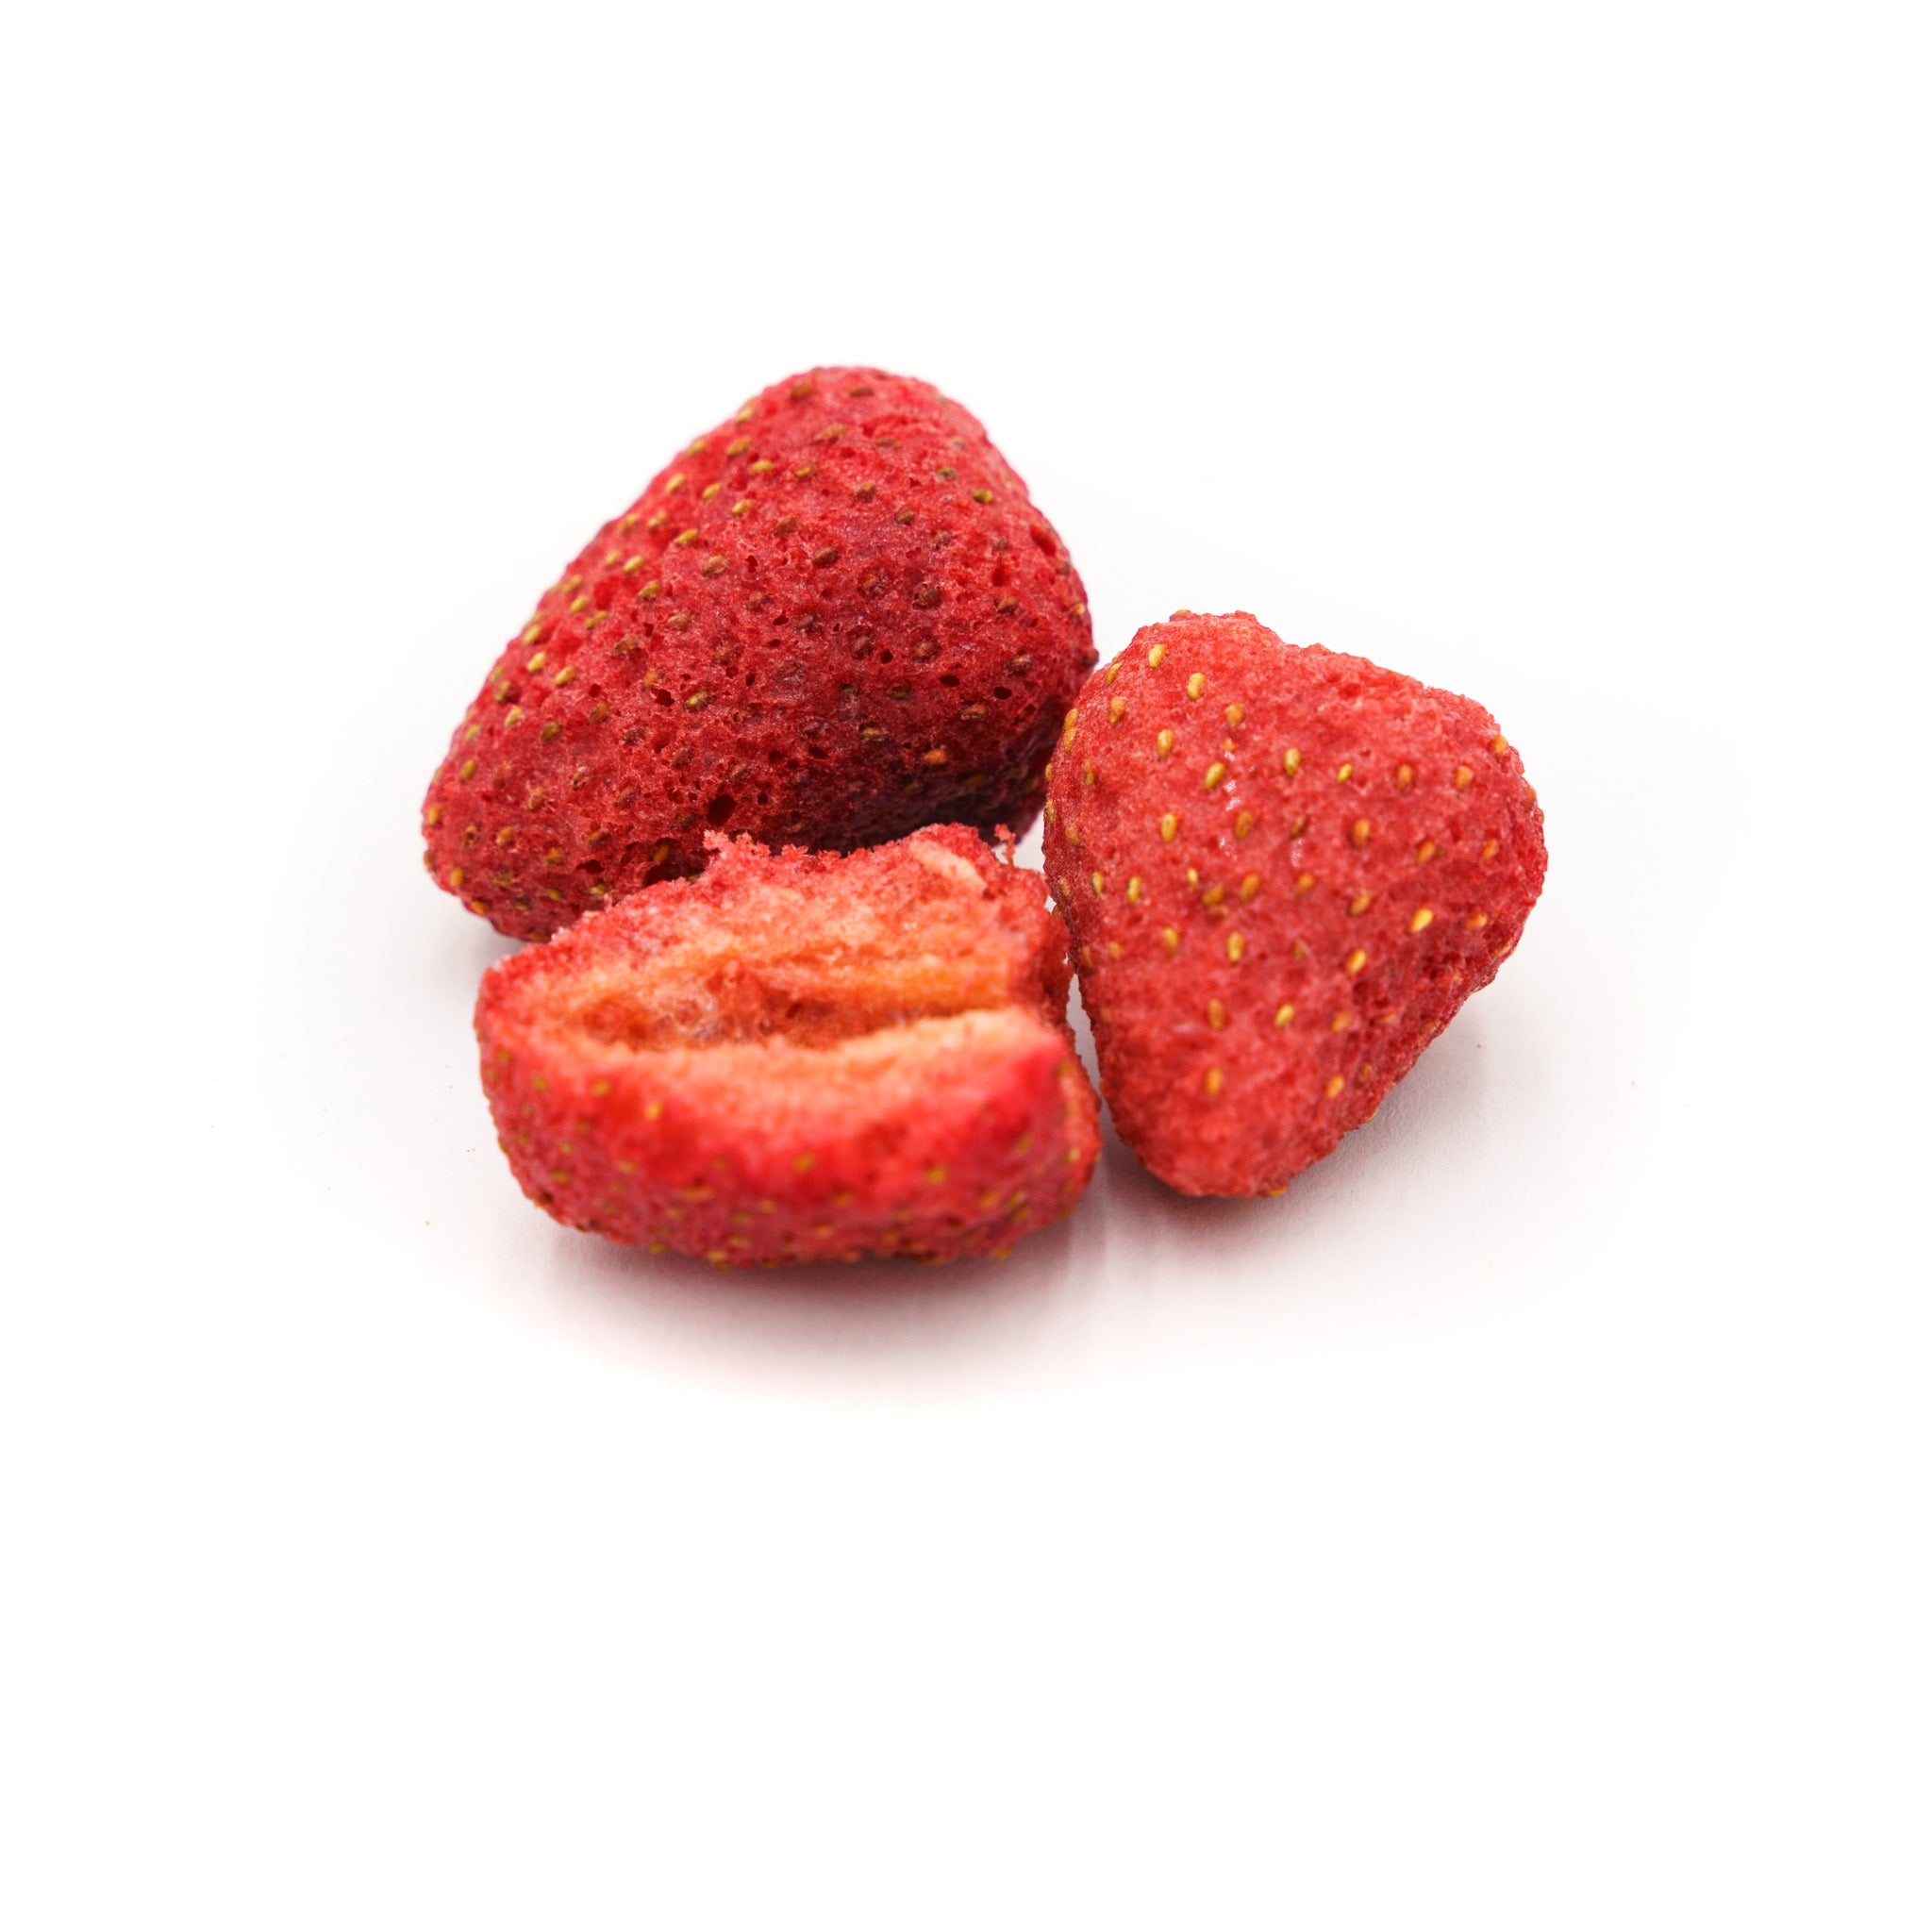 Freeze-dried Sweetened Whole Strawberries